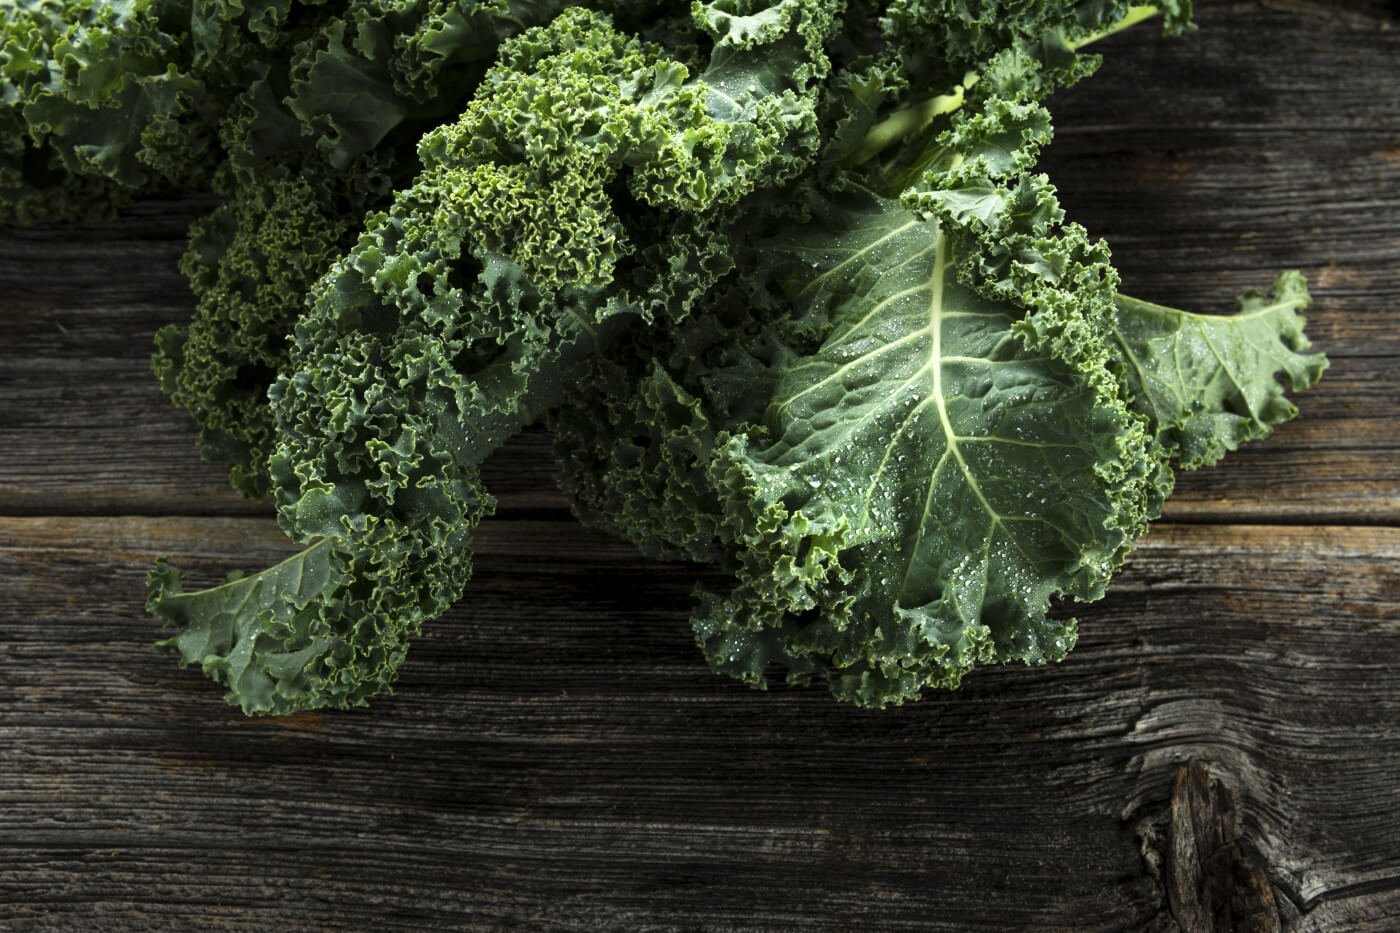 kale is rich in flavonoids